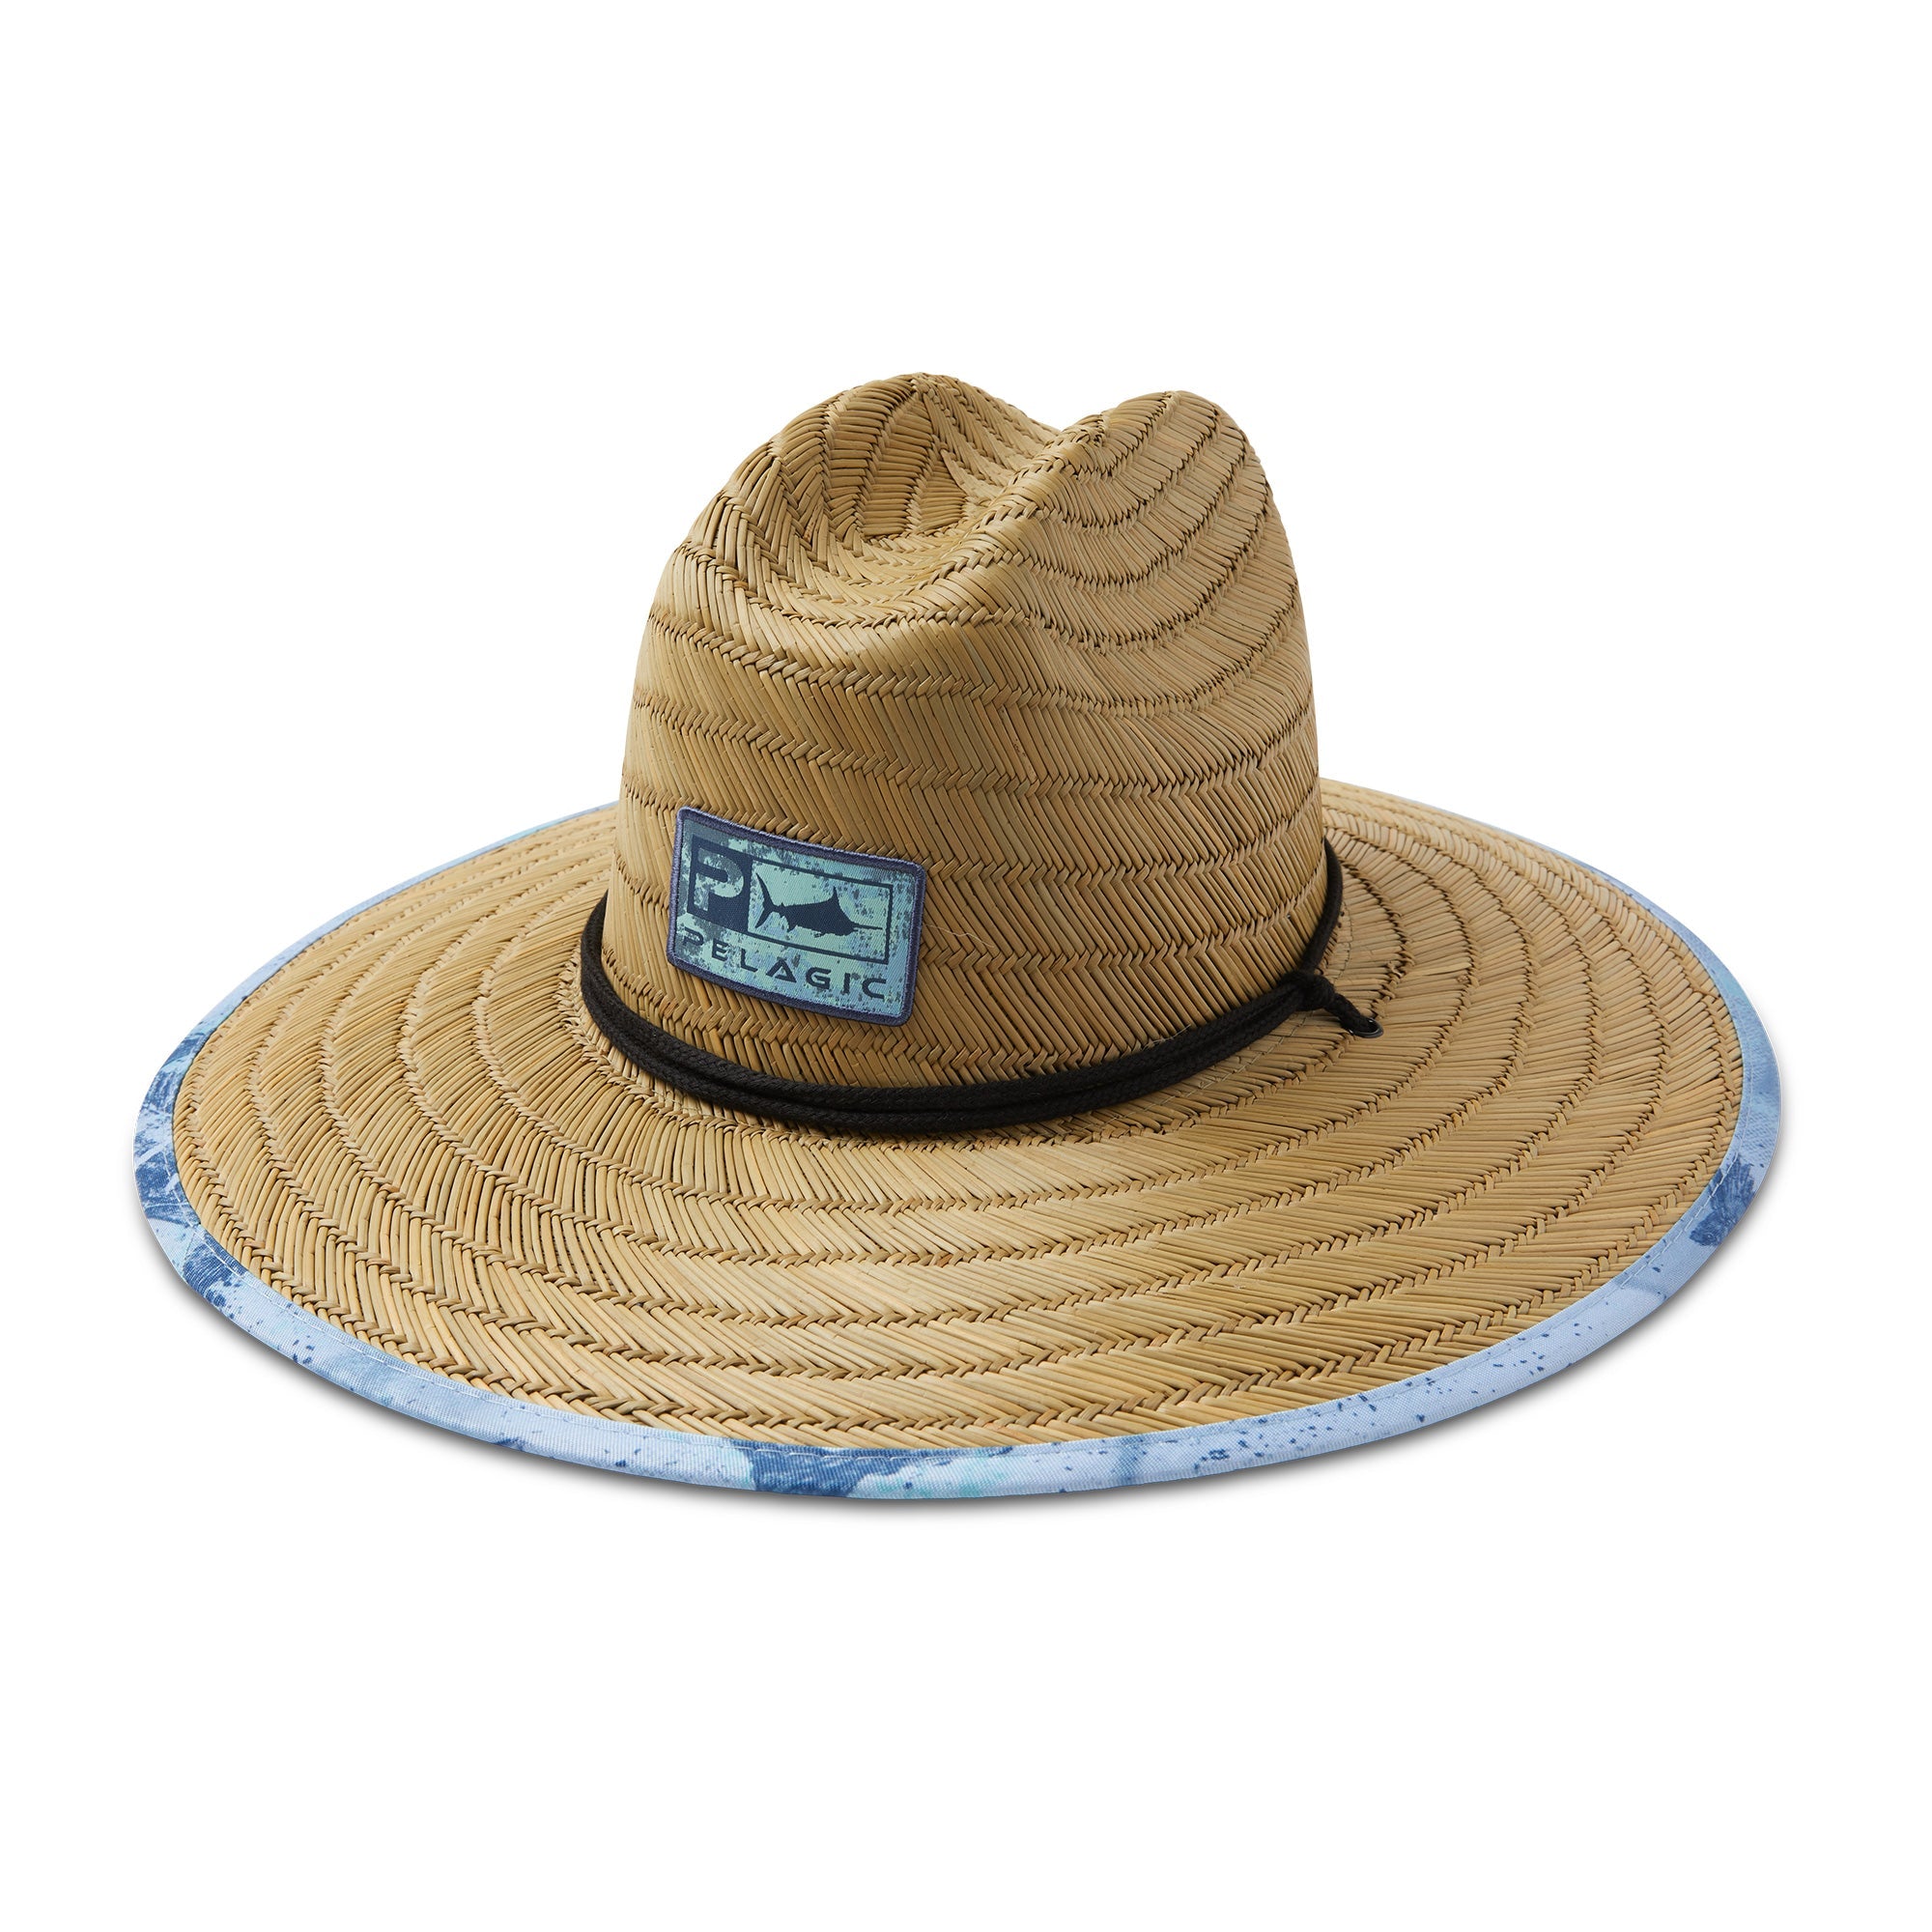 PELAGIC Baja Gyotaku HAT